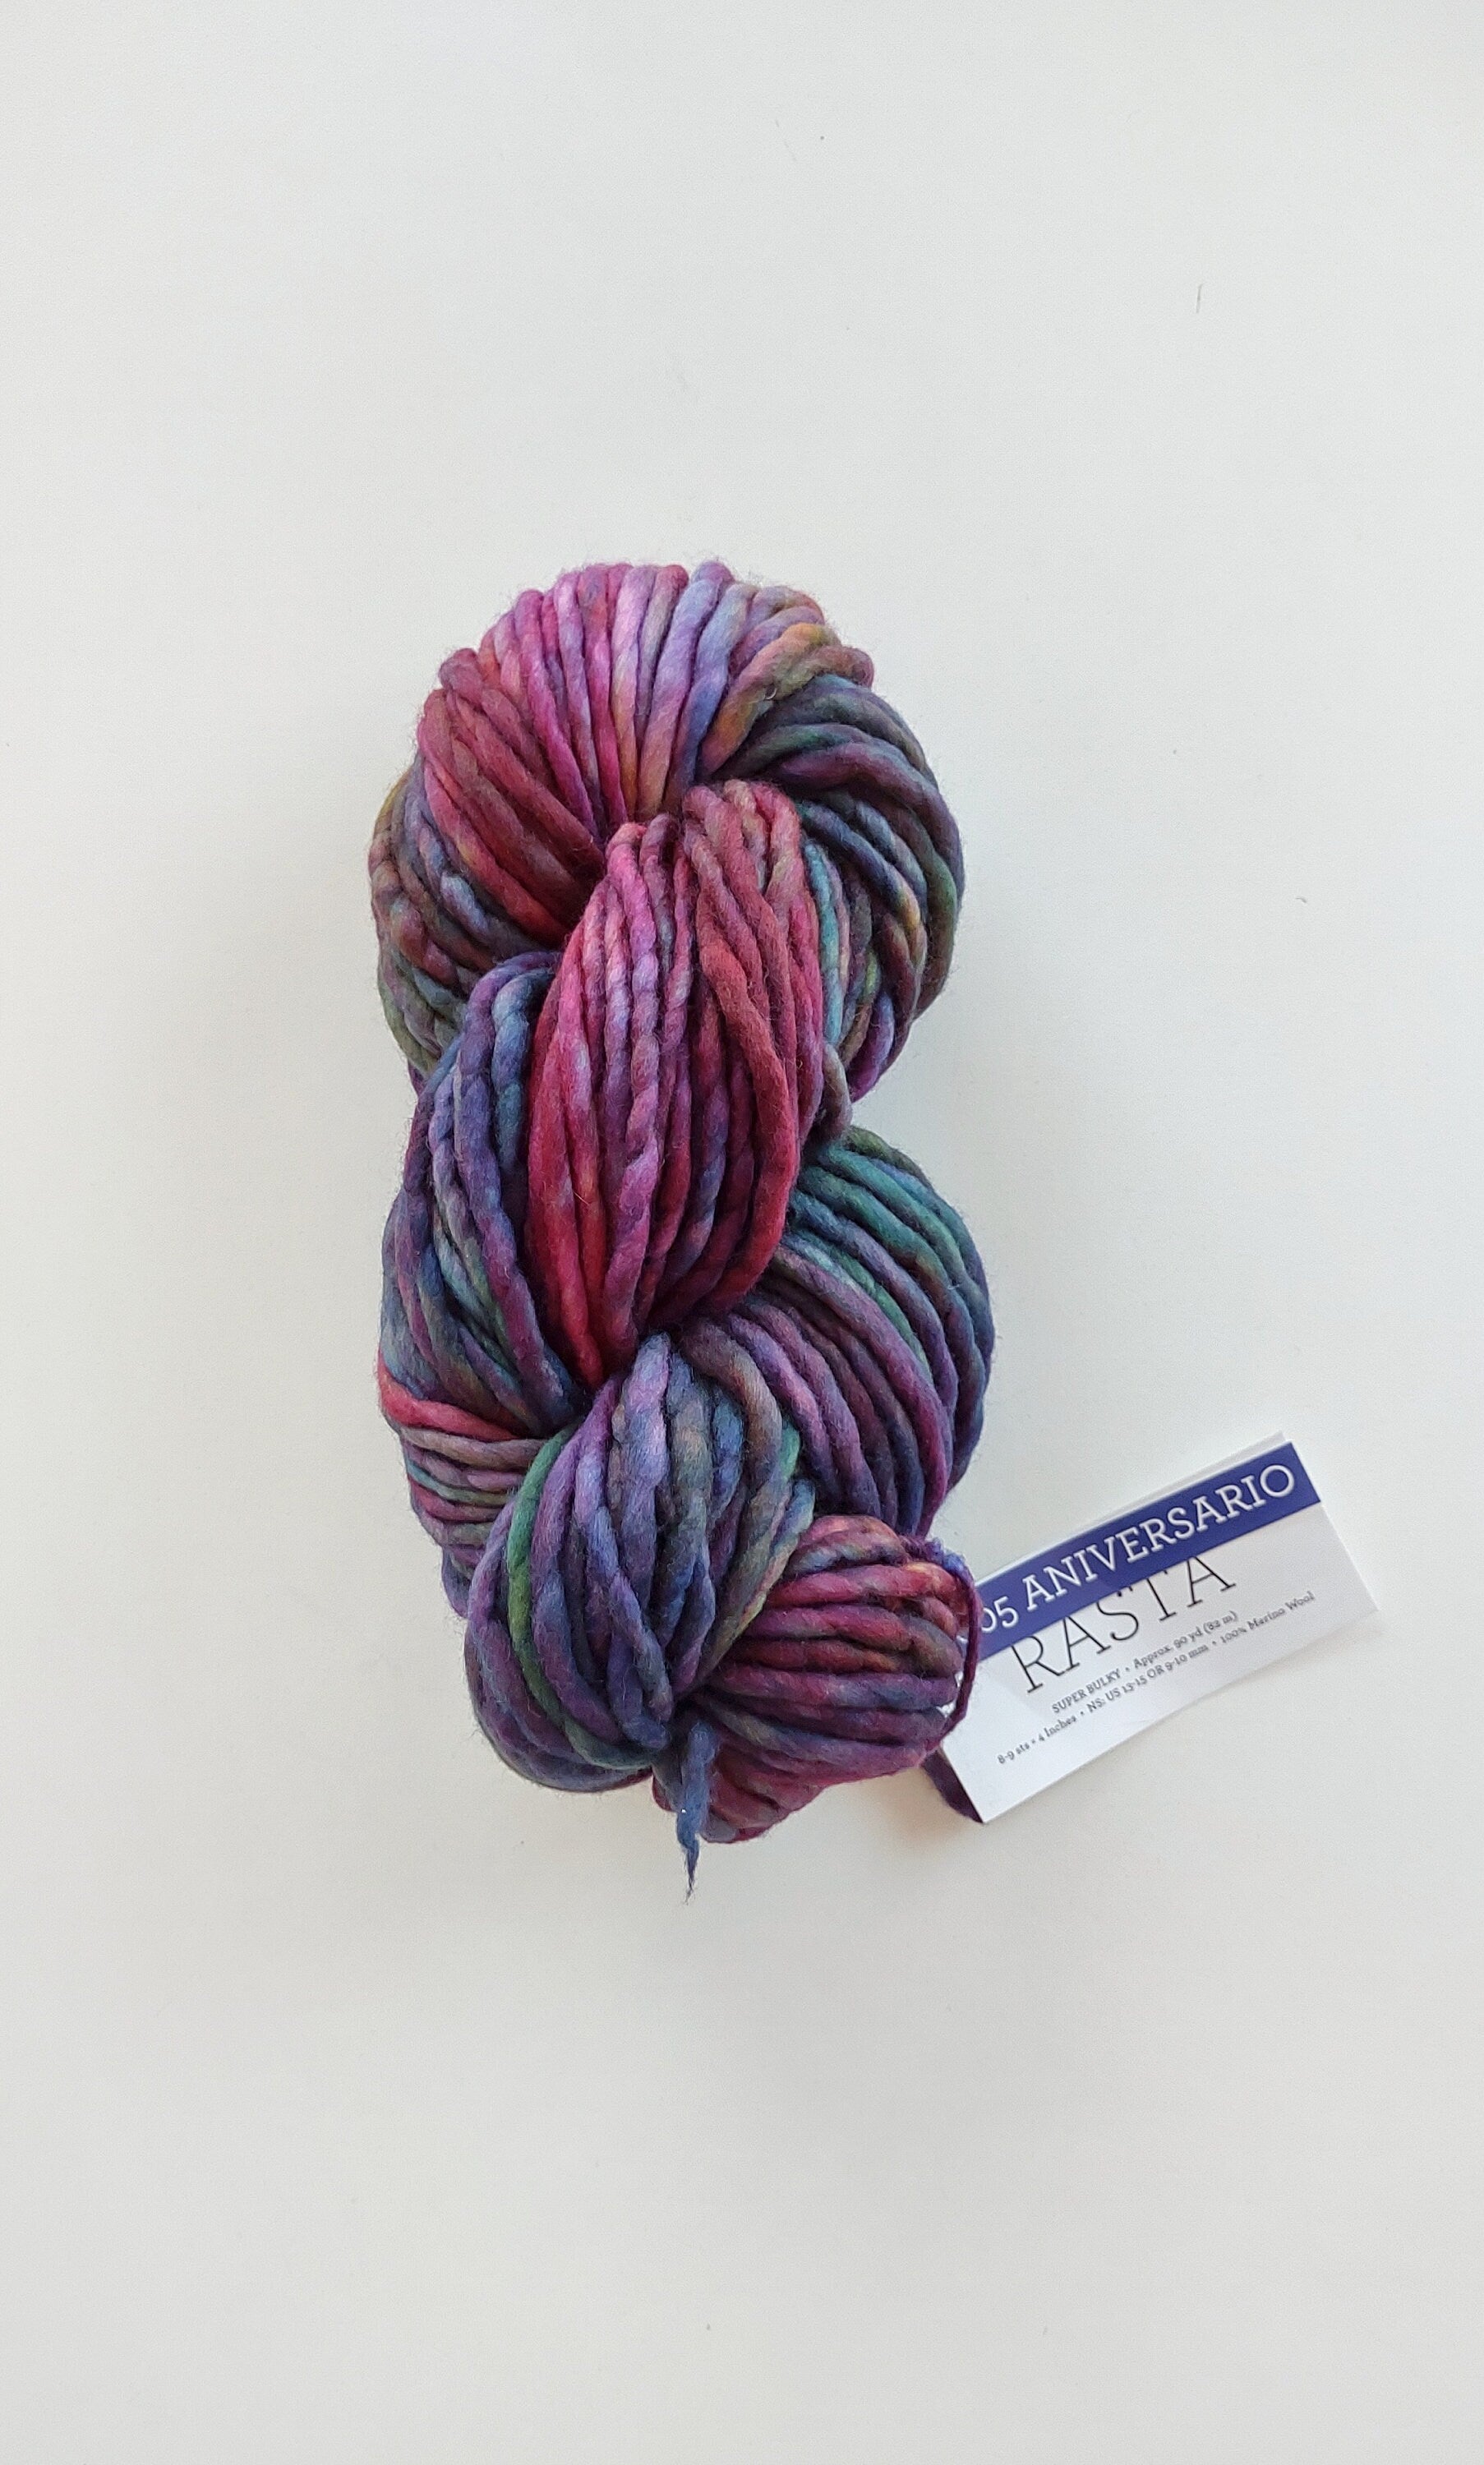 Malabrigo Rasta Yarn 1 skein of Anniversario. Knitting Kit. Soft Merino Wool Kit. Pattern NOT included. Purple pink blue yarn knit crochet